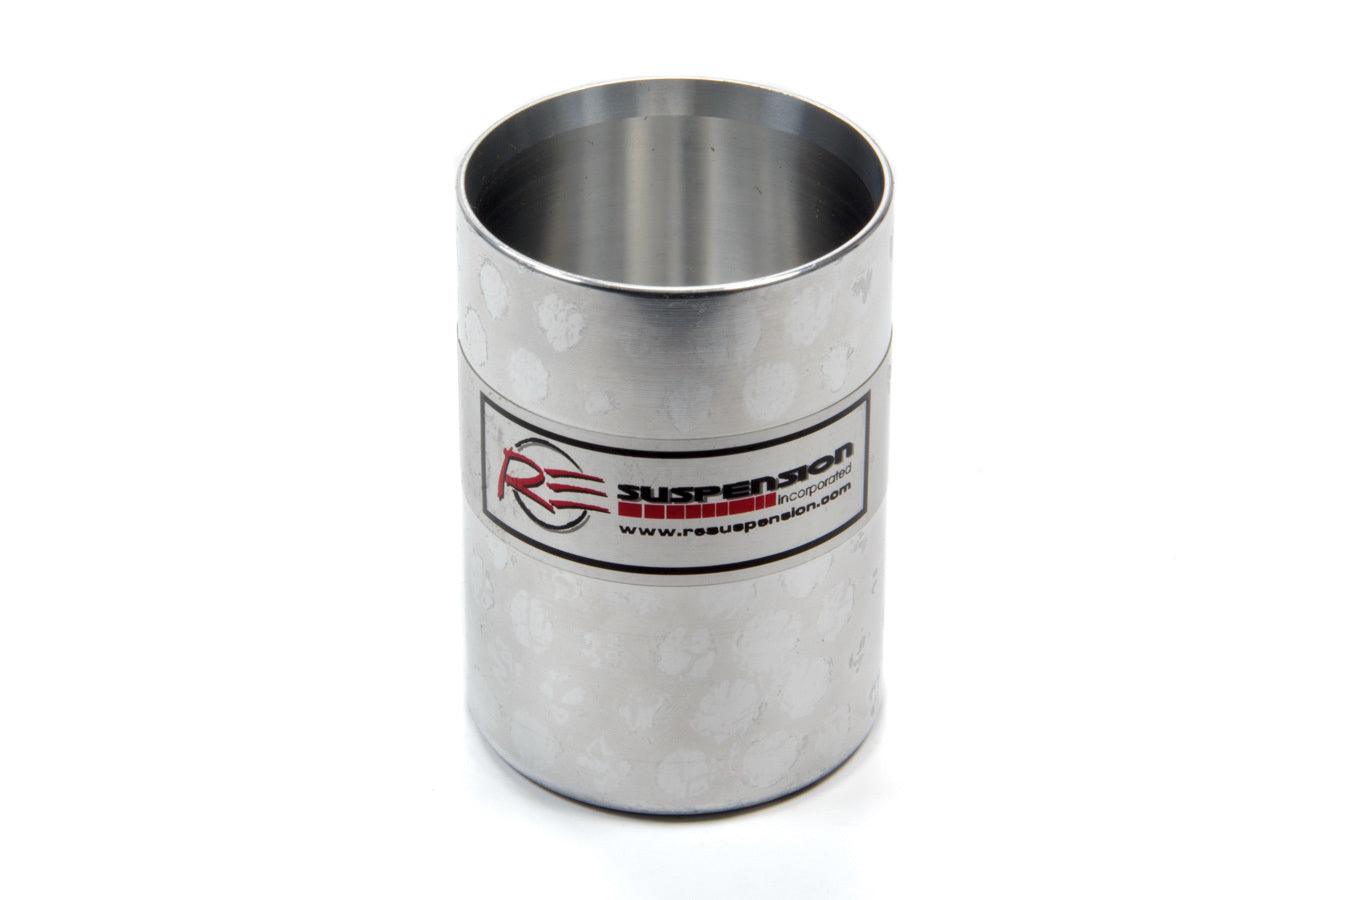 Penske Bump Rubber Cup 3in - Burlile Performance Products